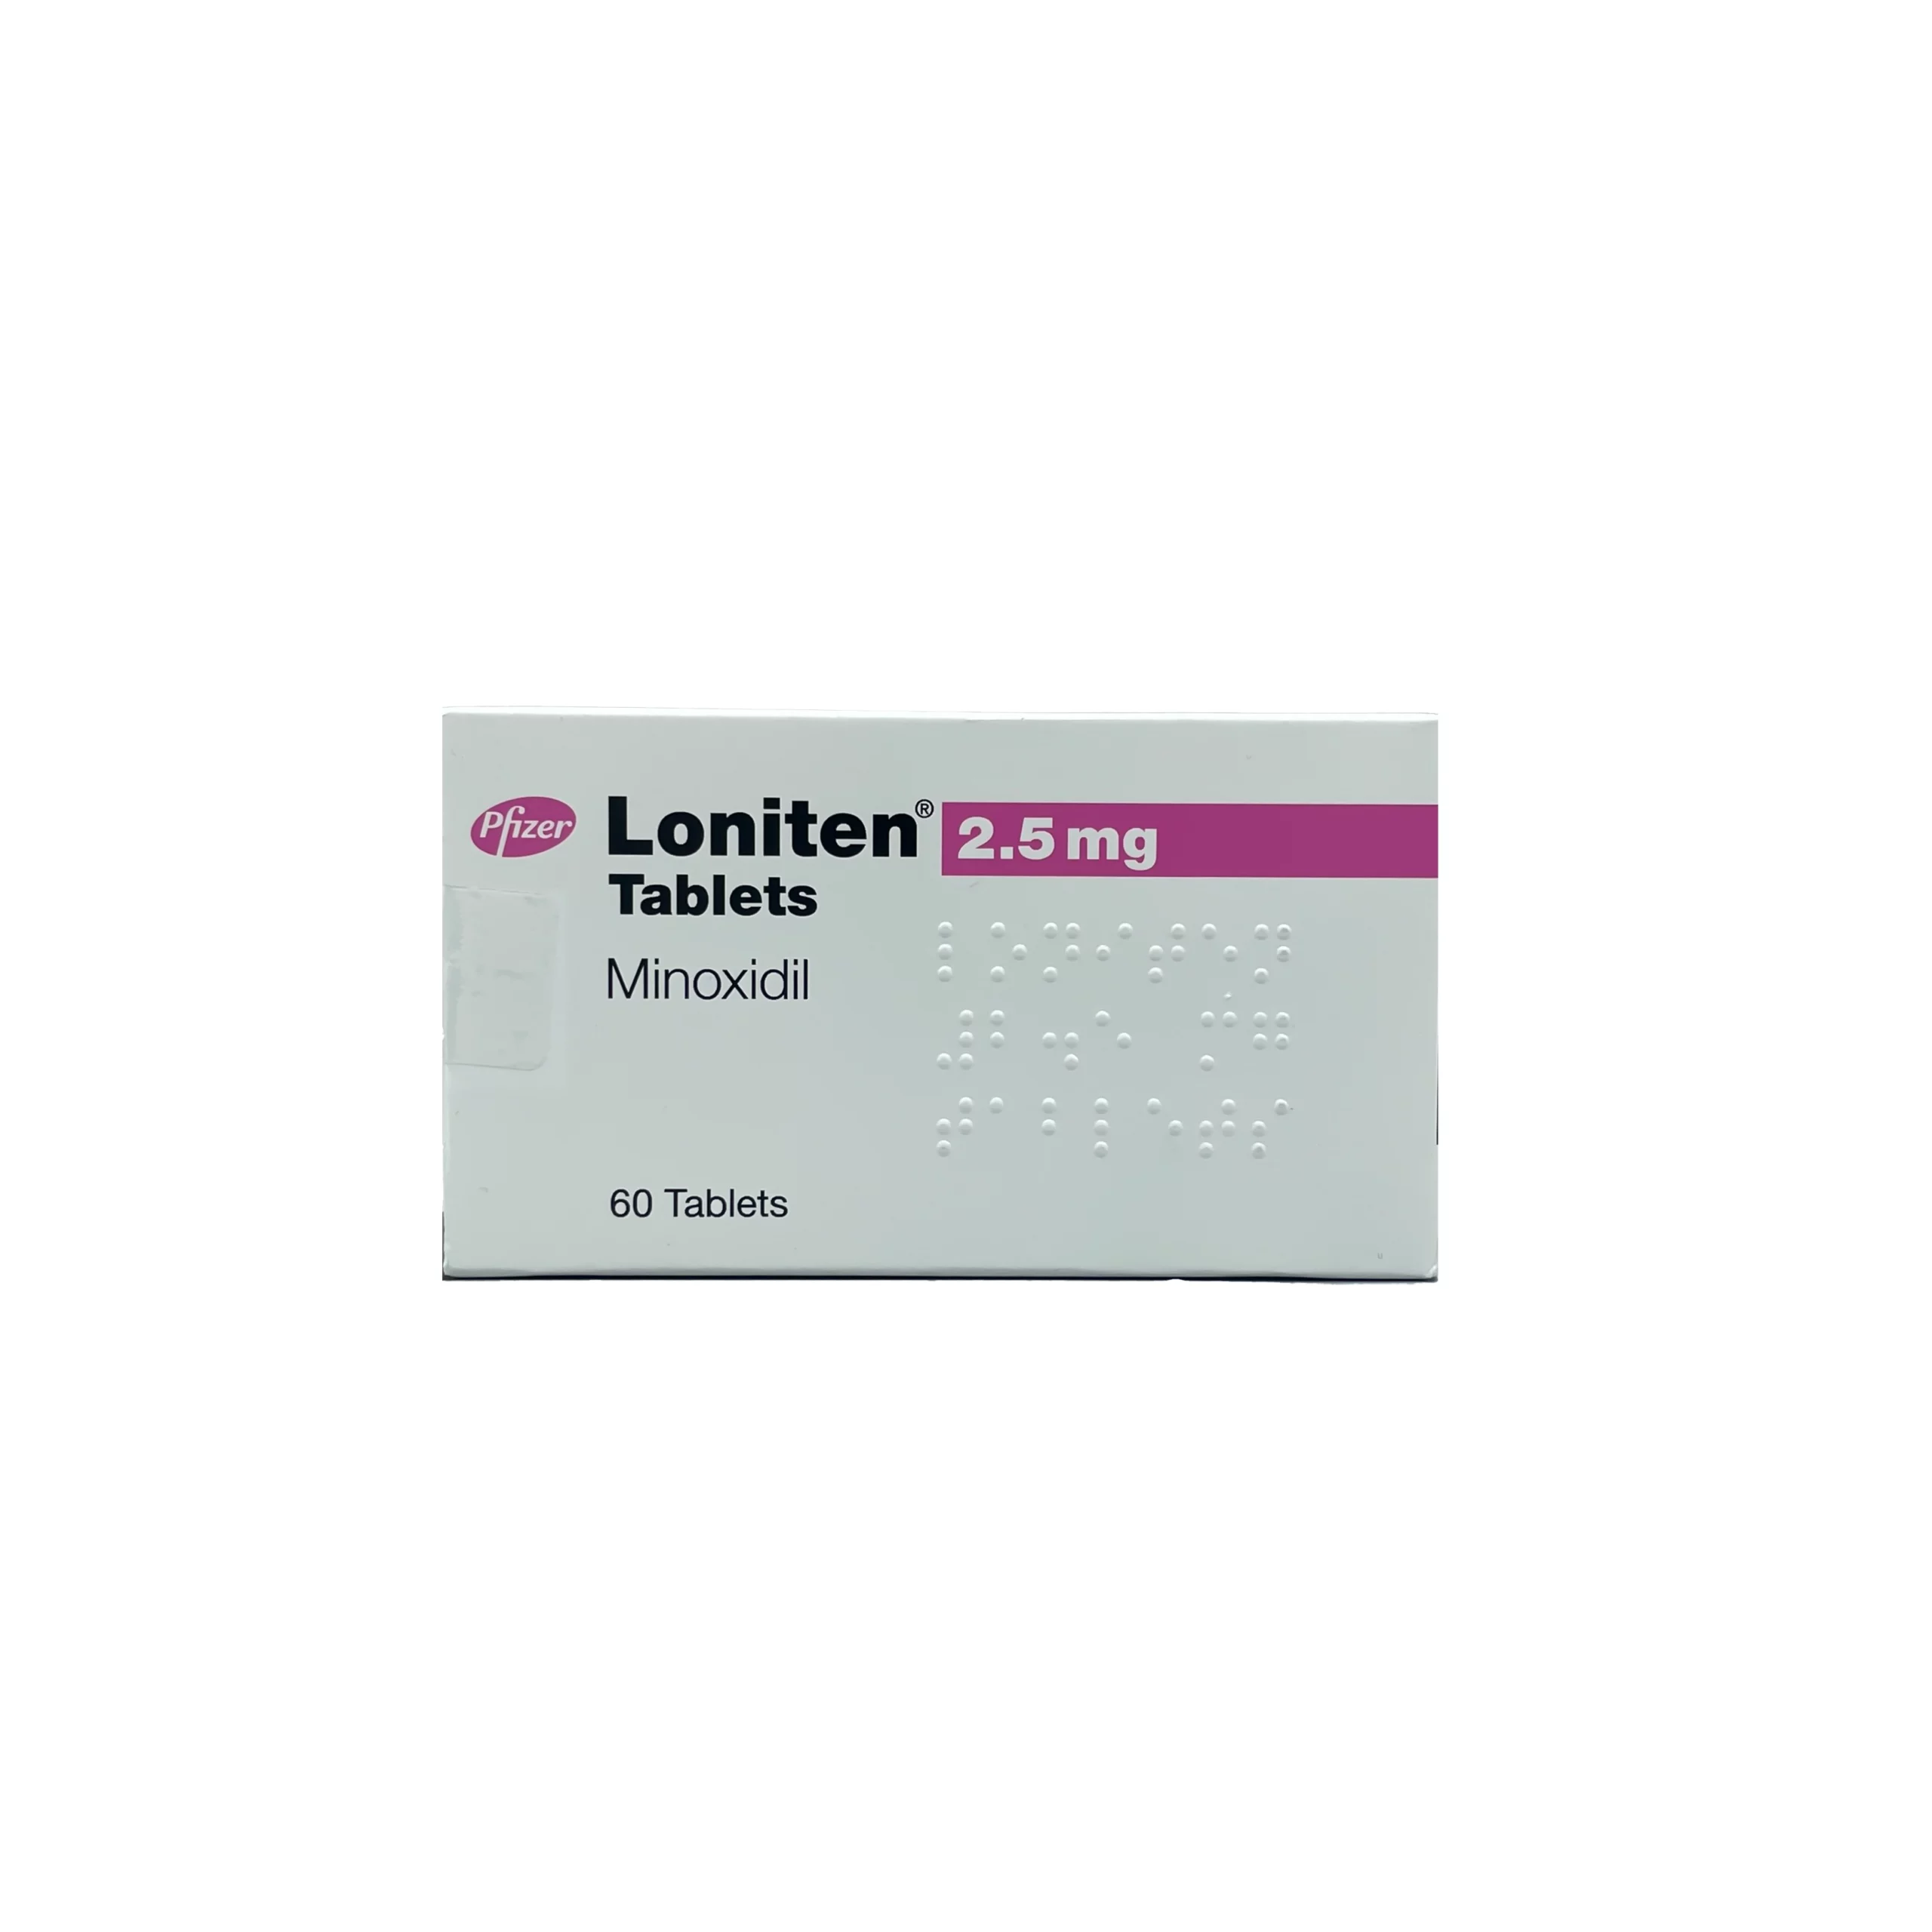 Loniten (Minoxidil) tablets